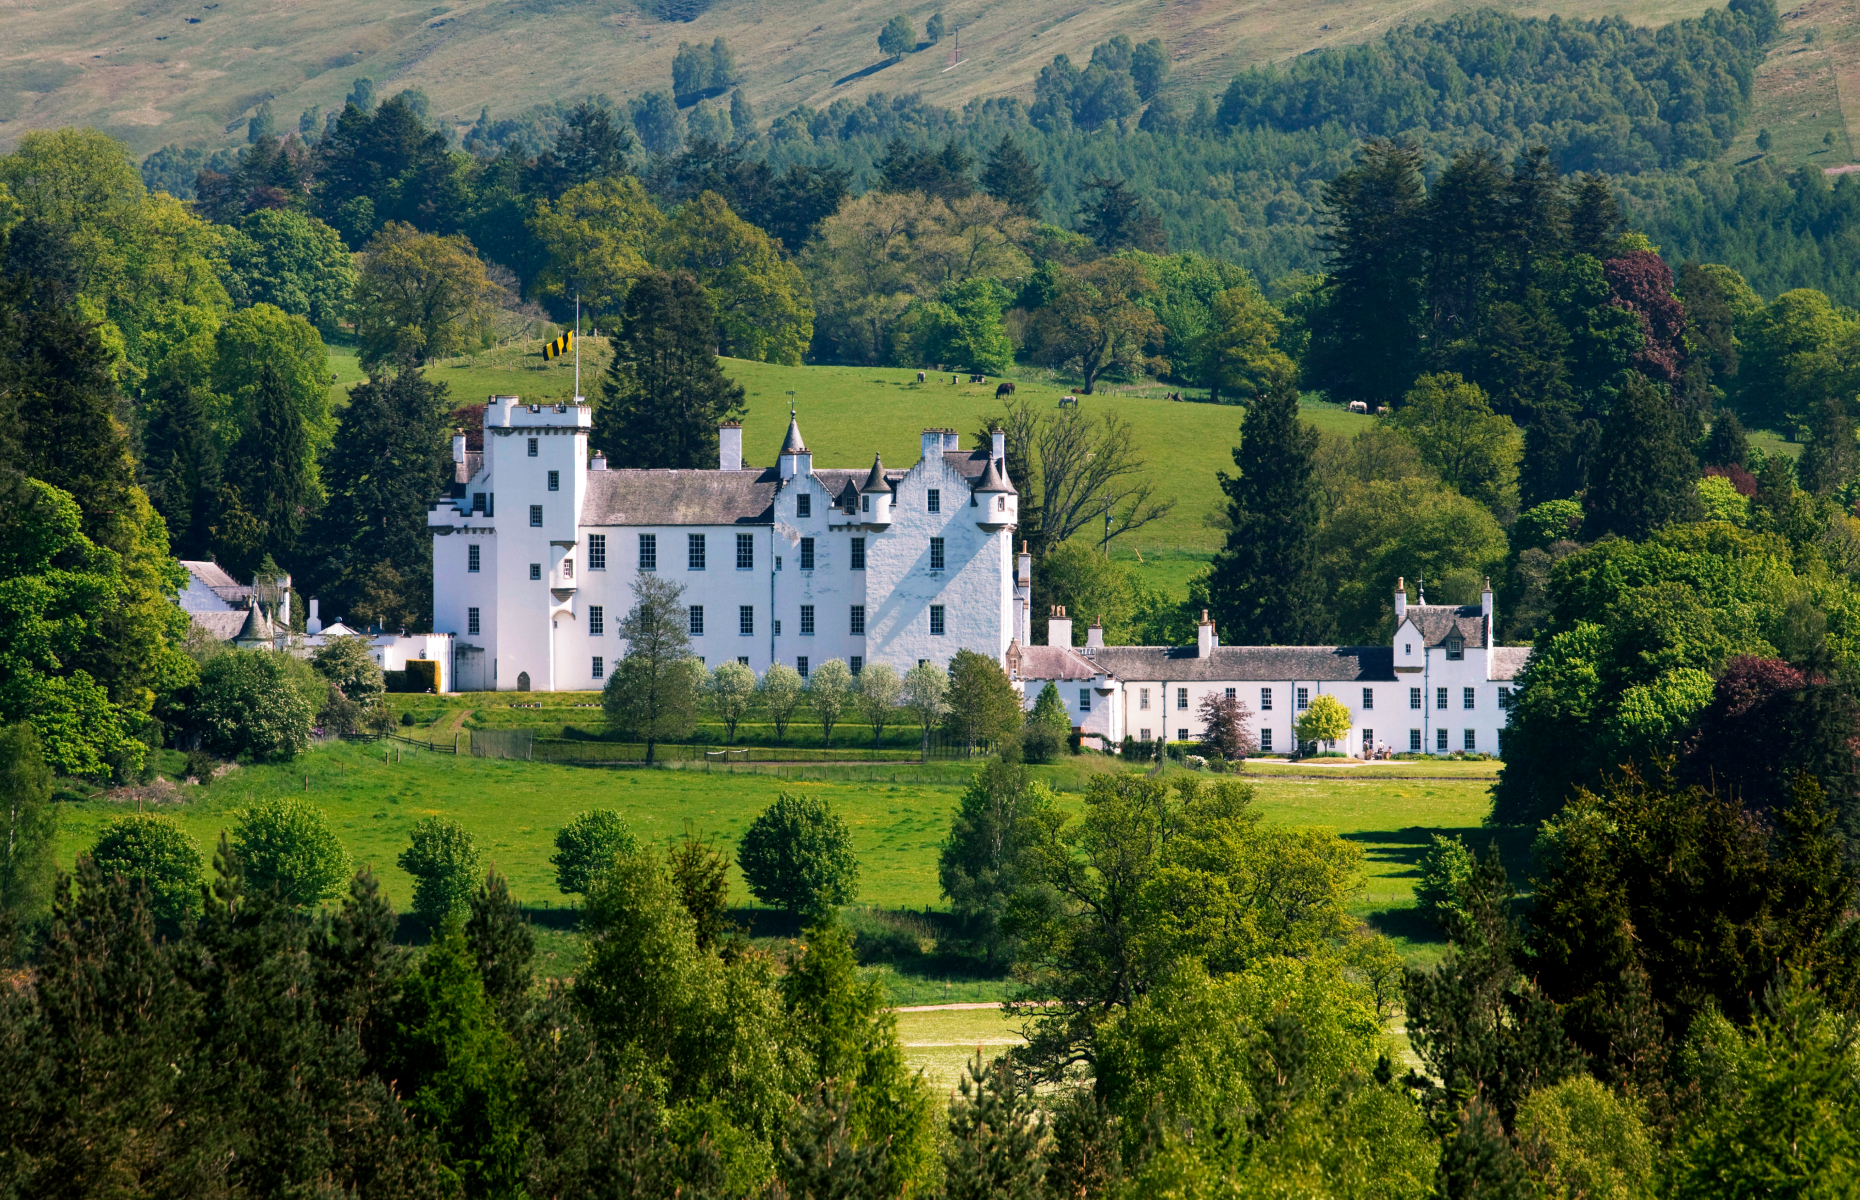 Blair Castle (Image Courtesy of Visit Scotland